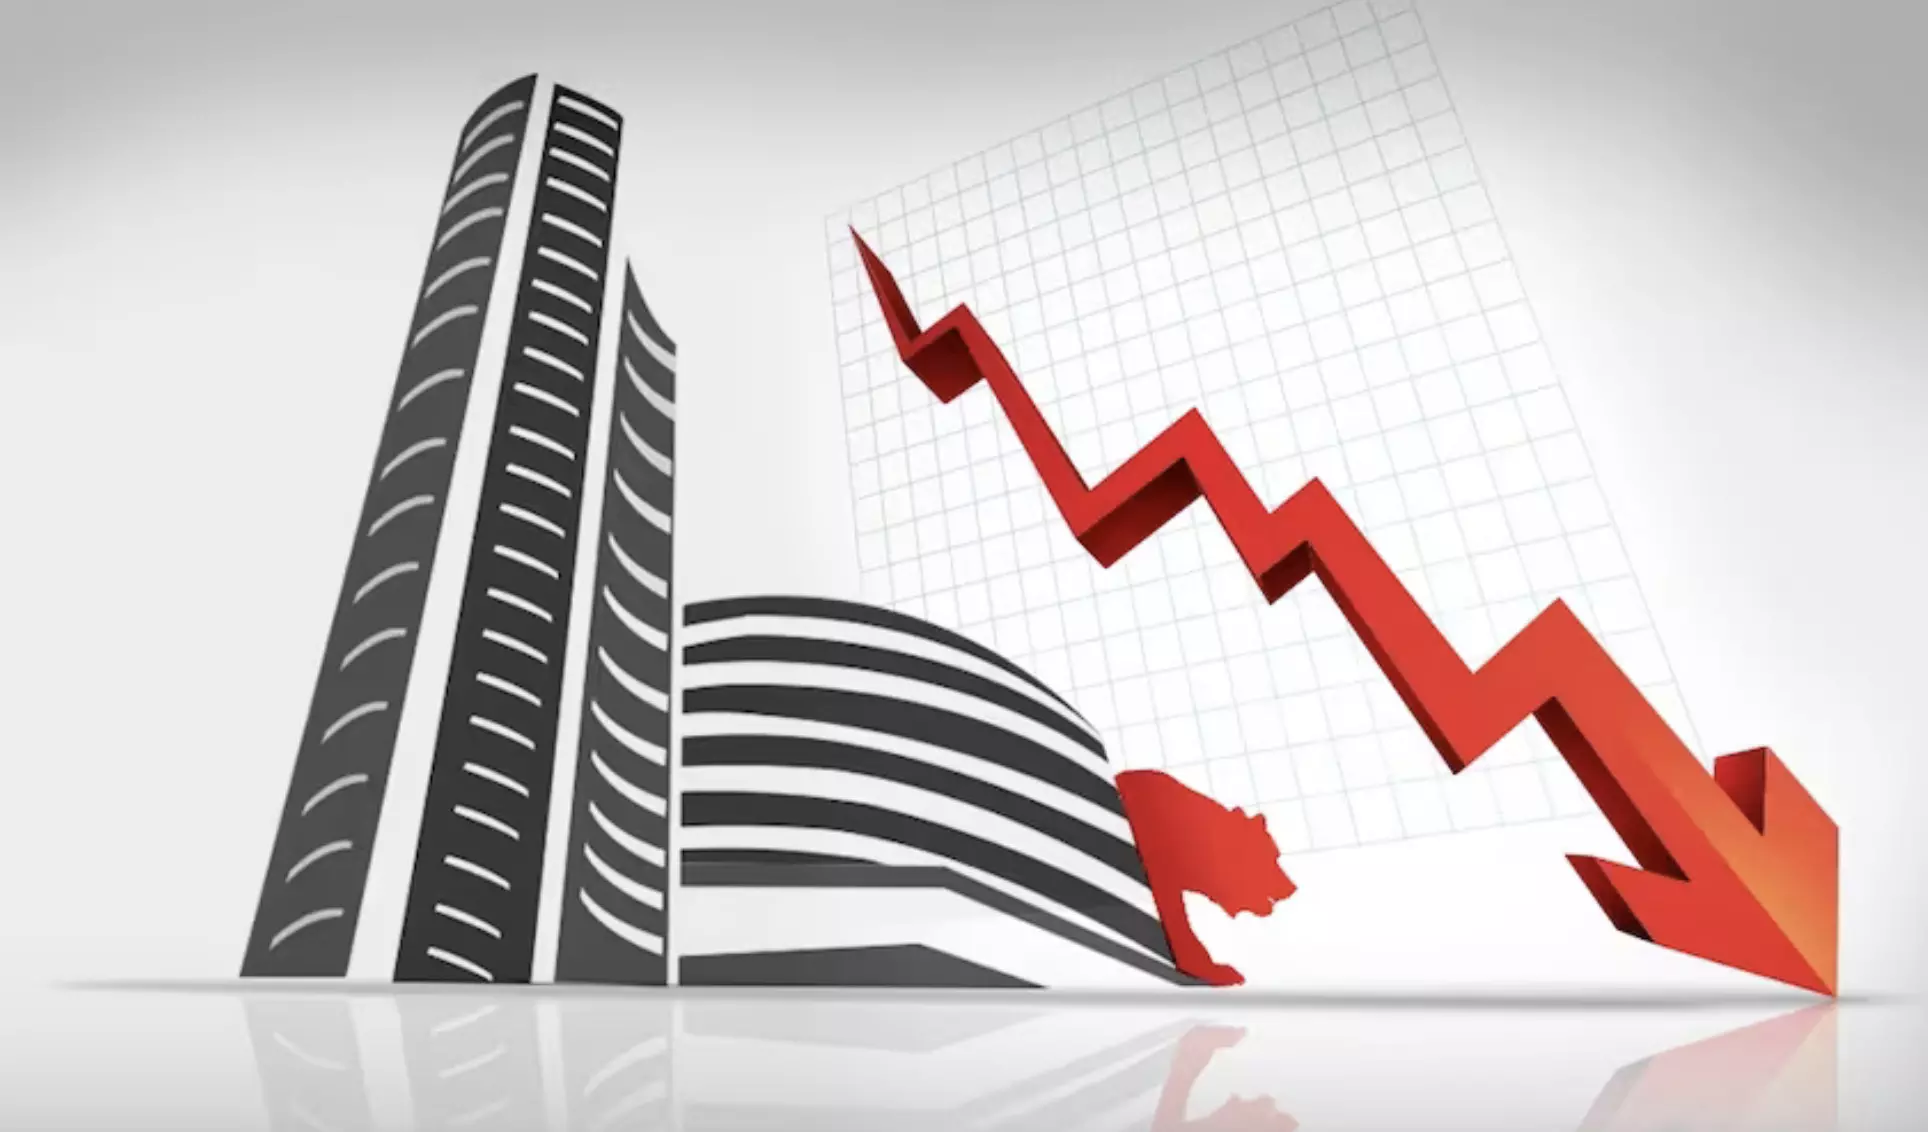 NTPC and Mahindra Logistics experience downturns, market volatility persists